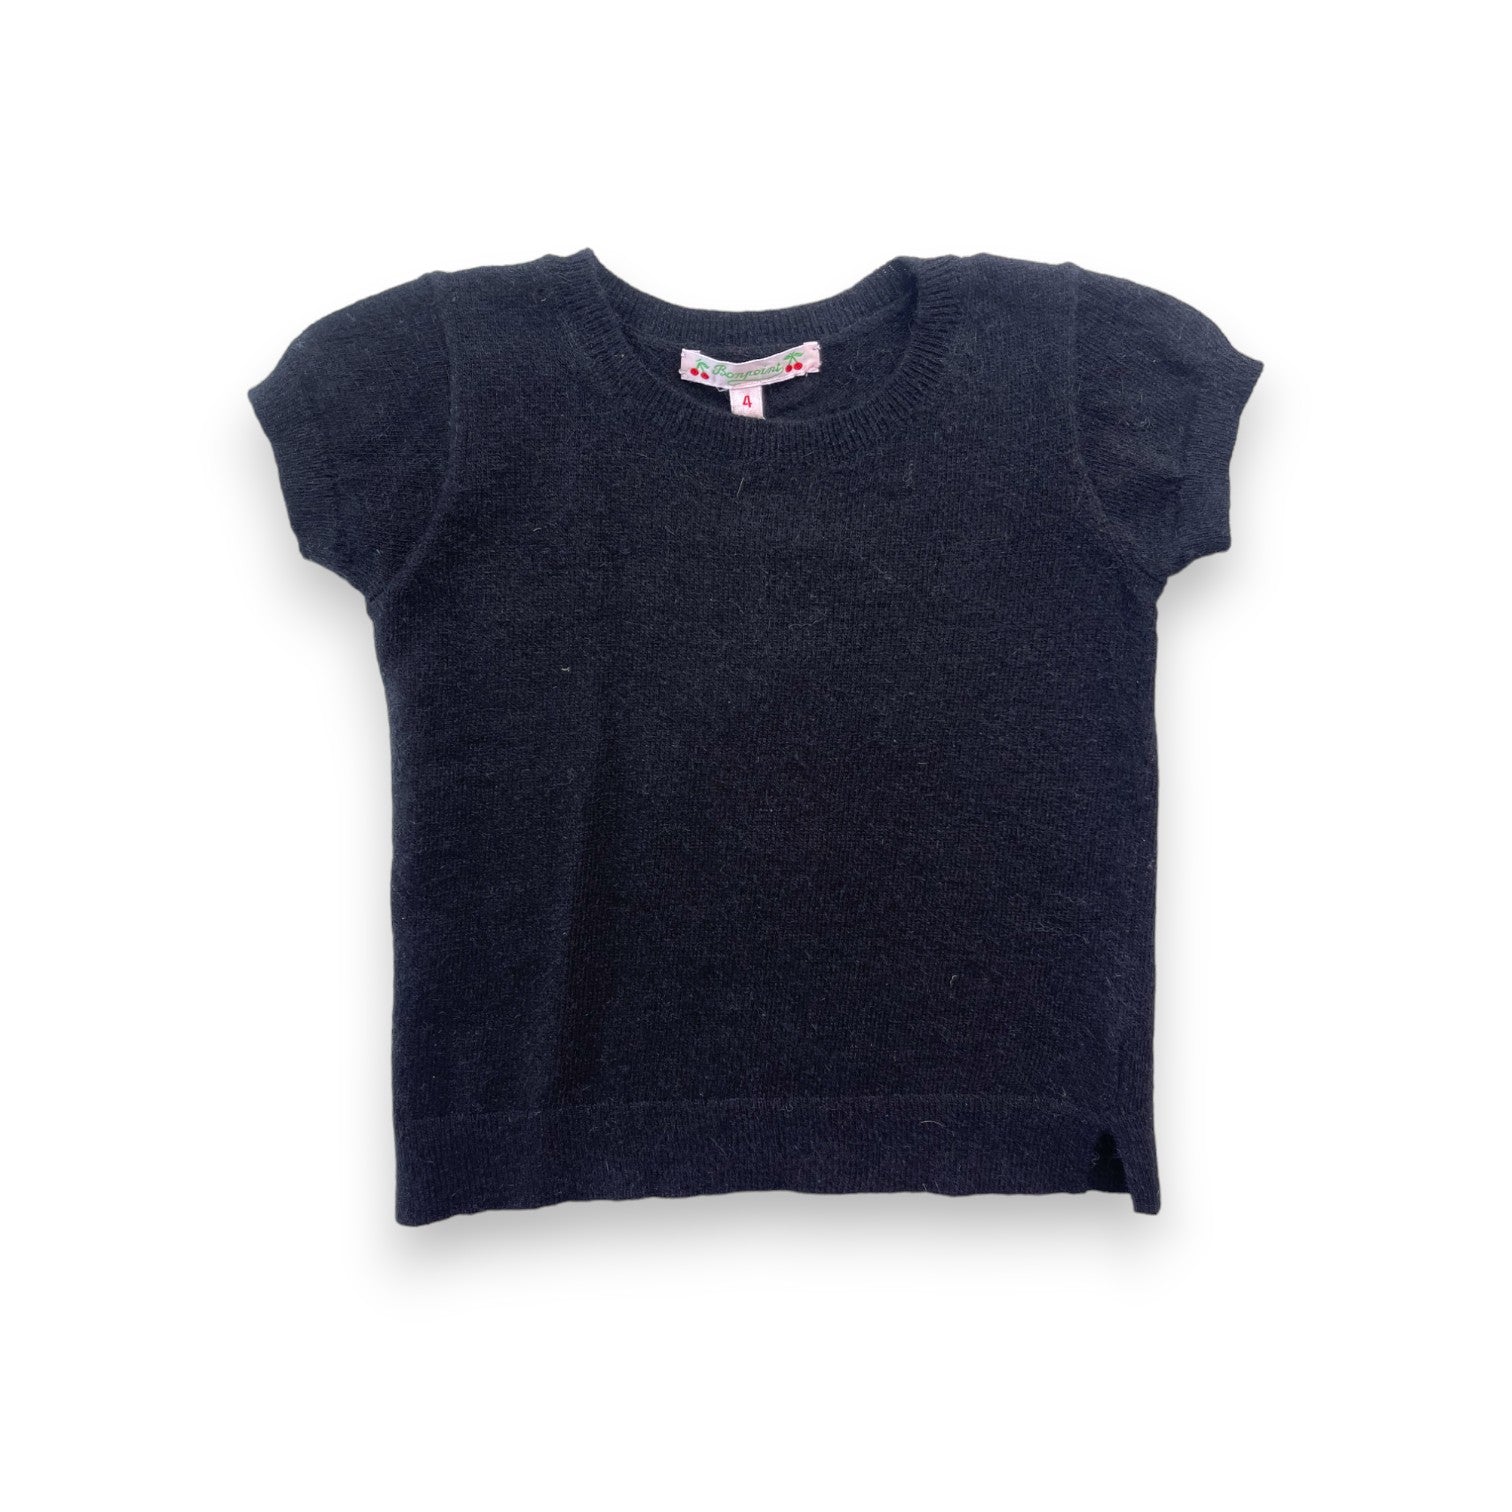 BONPOINT - T shirt pull noir (neuf) - 4 ans